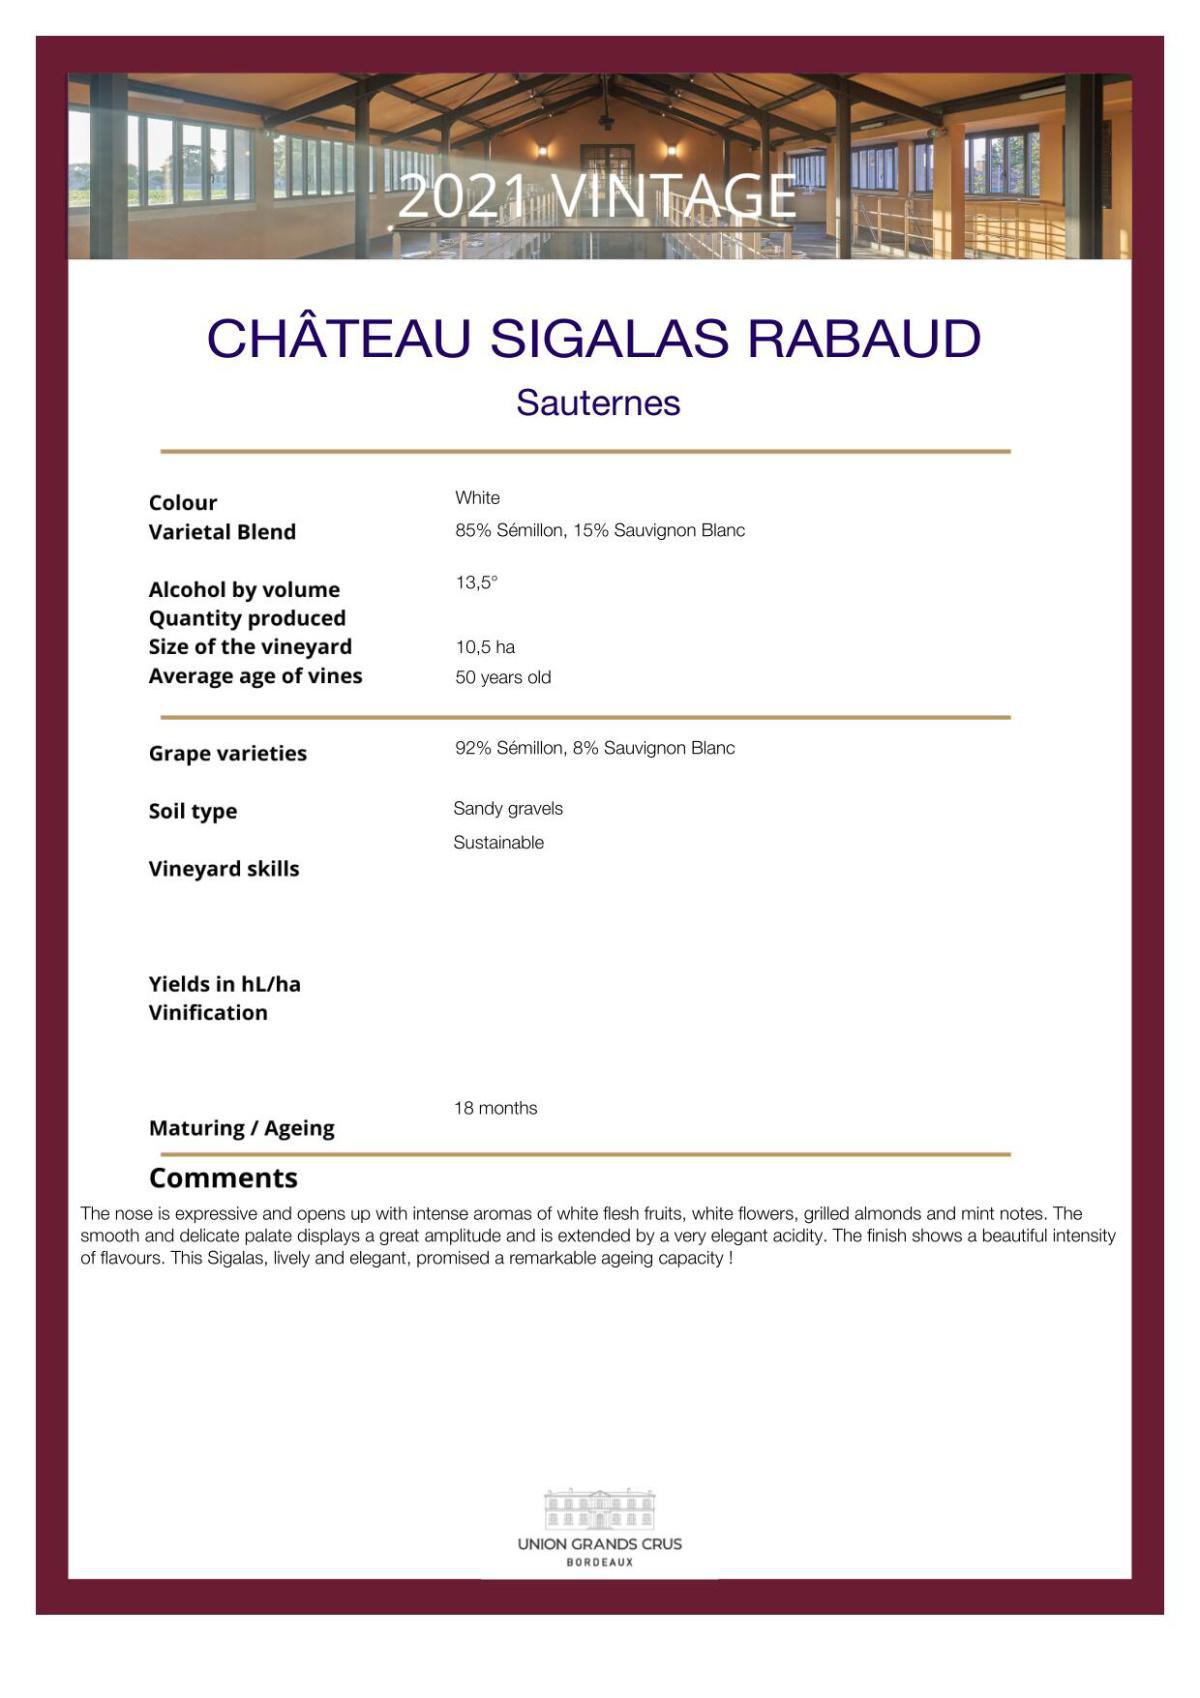 Château Sigalas Rabaud